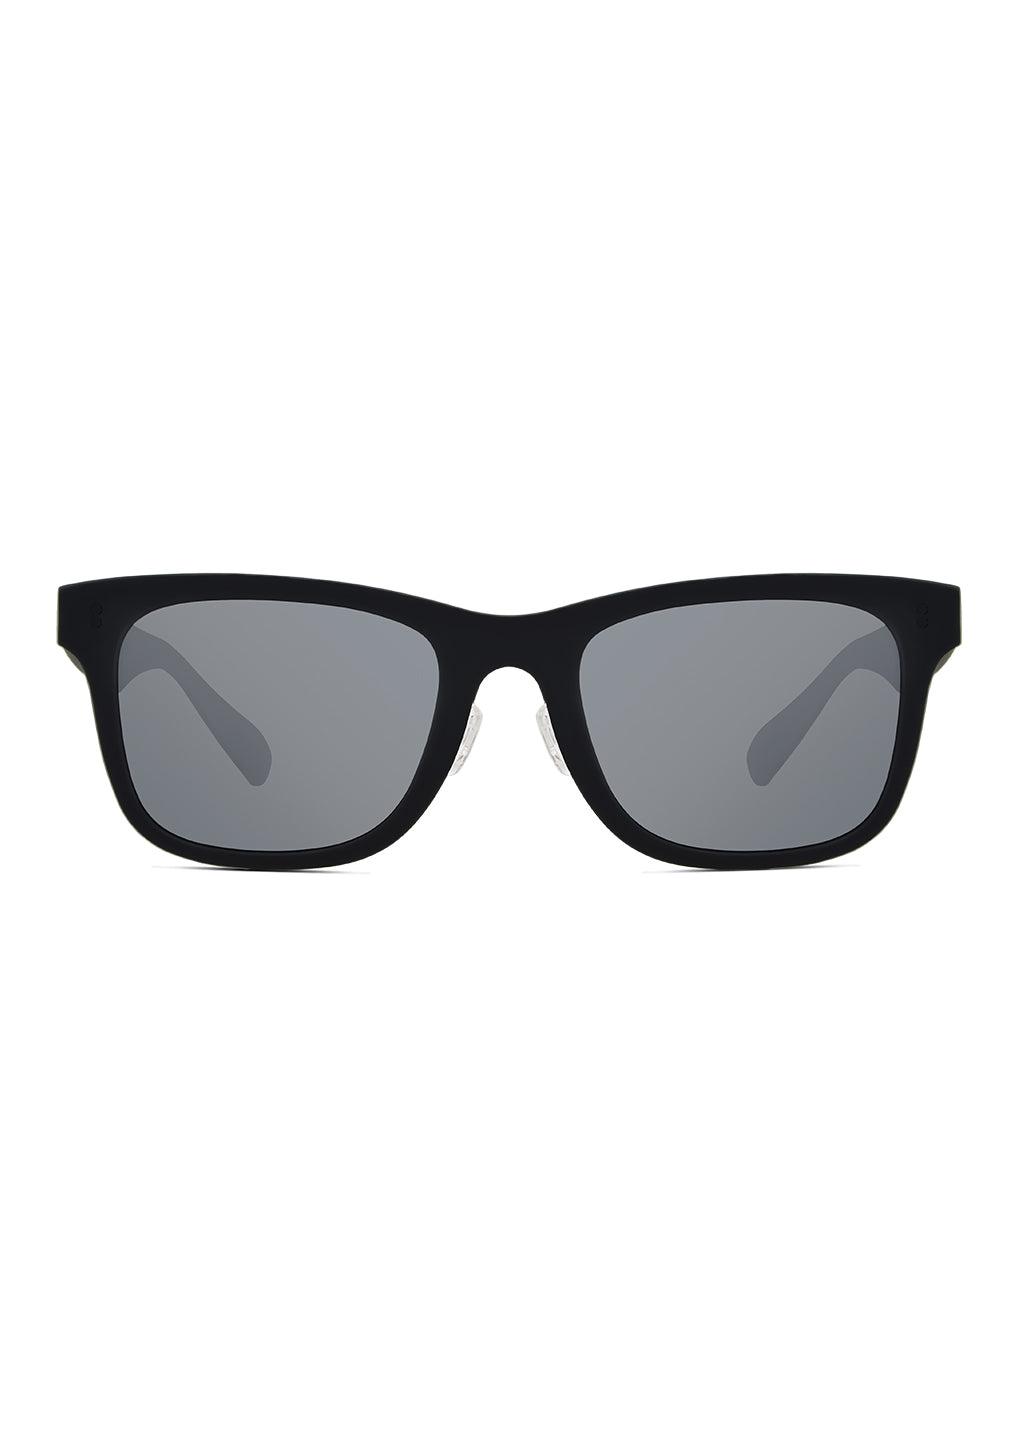 ReVision Wayfarer - Eco-Friendly Recyclable Paper Sunglasses-1